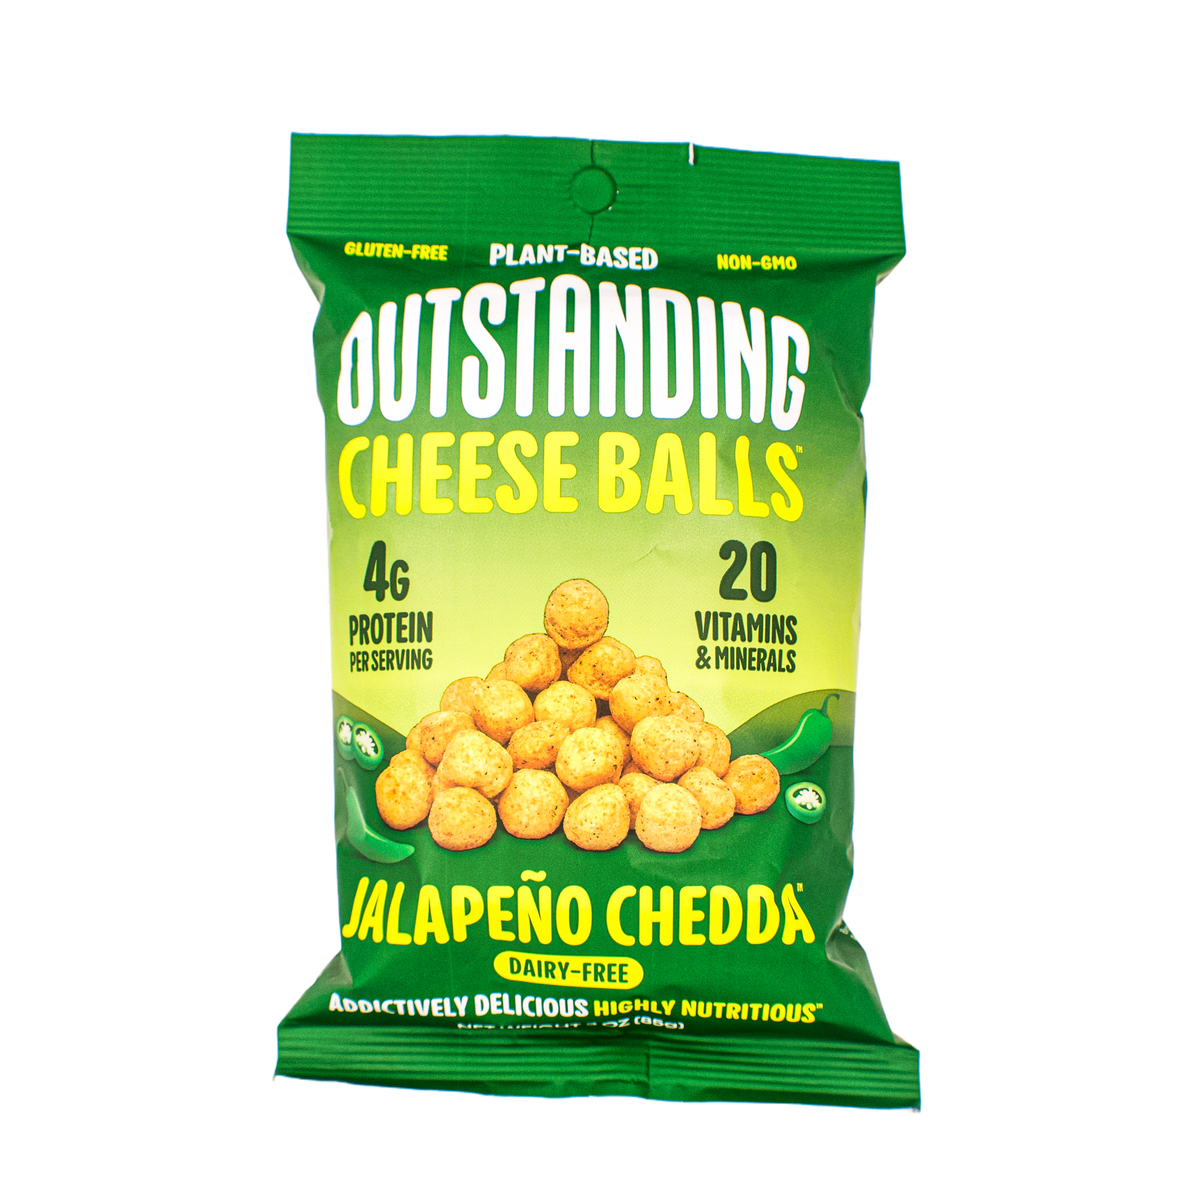 Outstanding Cheese Balls Jalapeño Chedda